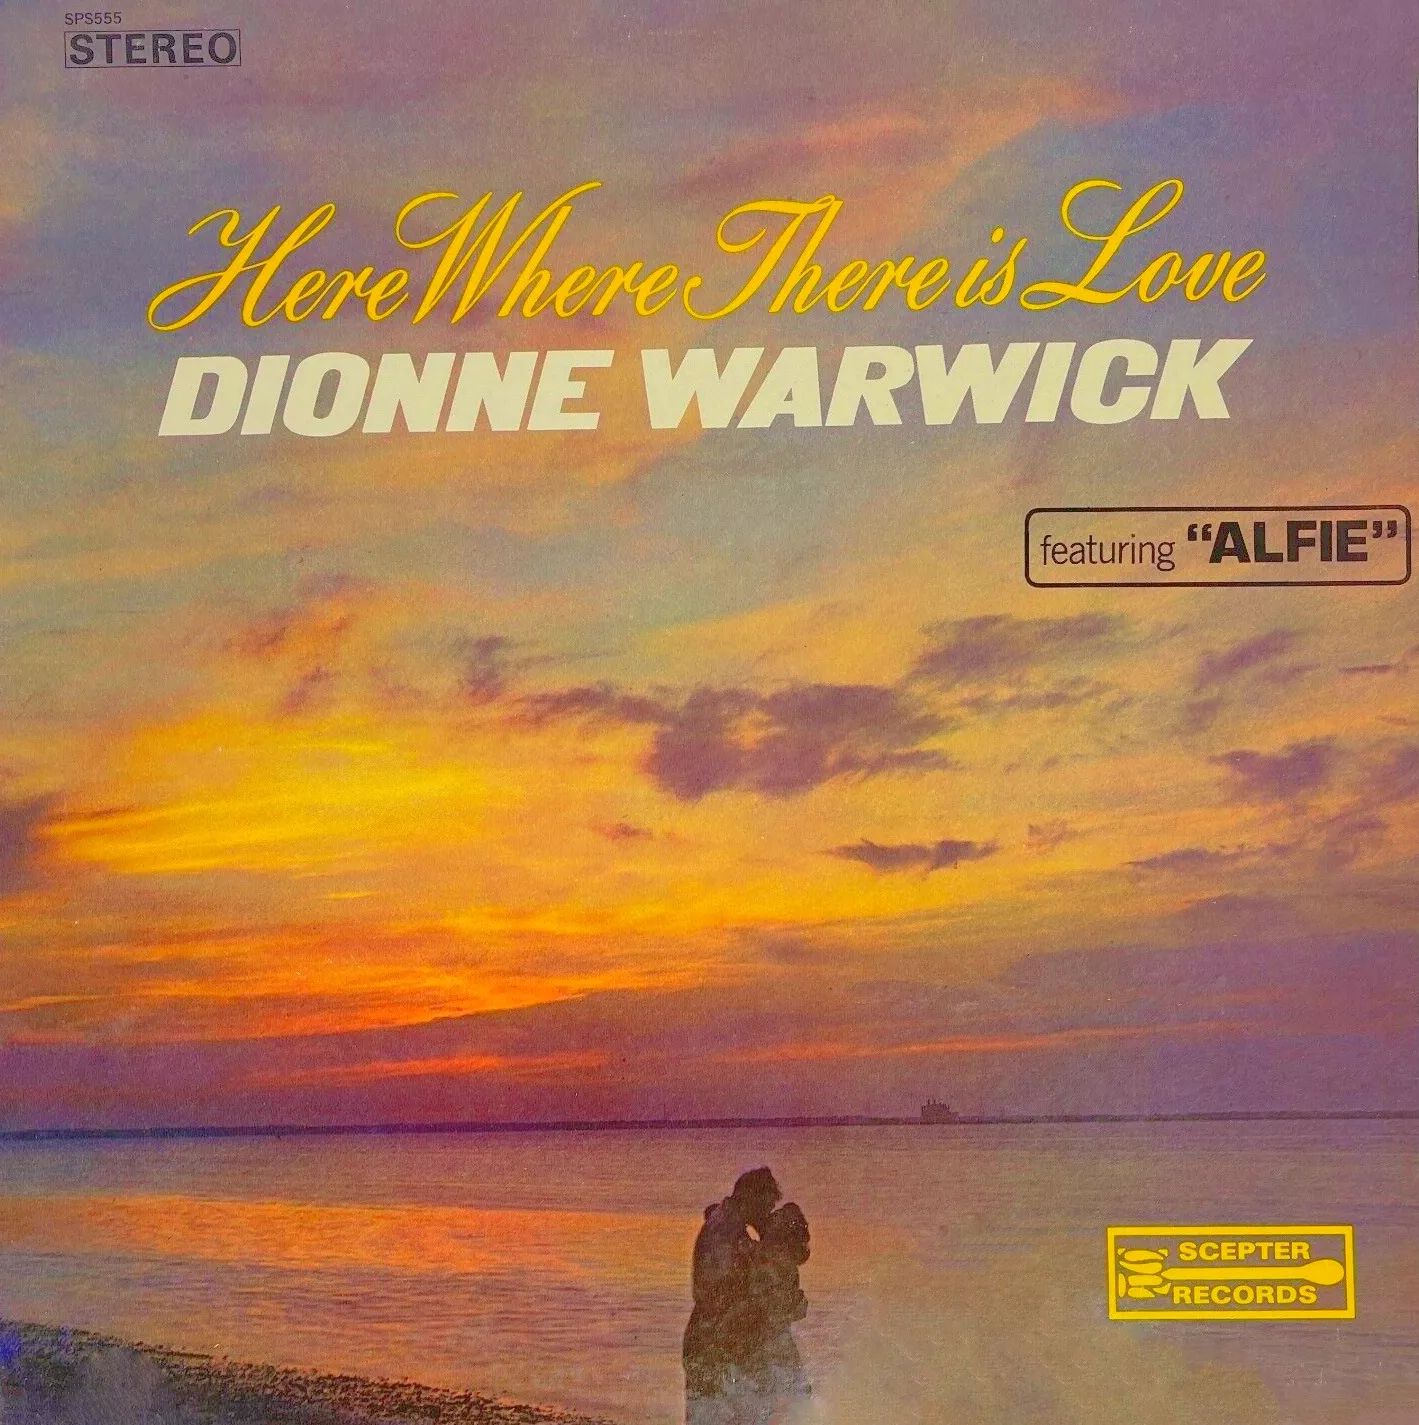 I'll never Fal in Love Again (tradução/letra) - Dionne Warwick